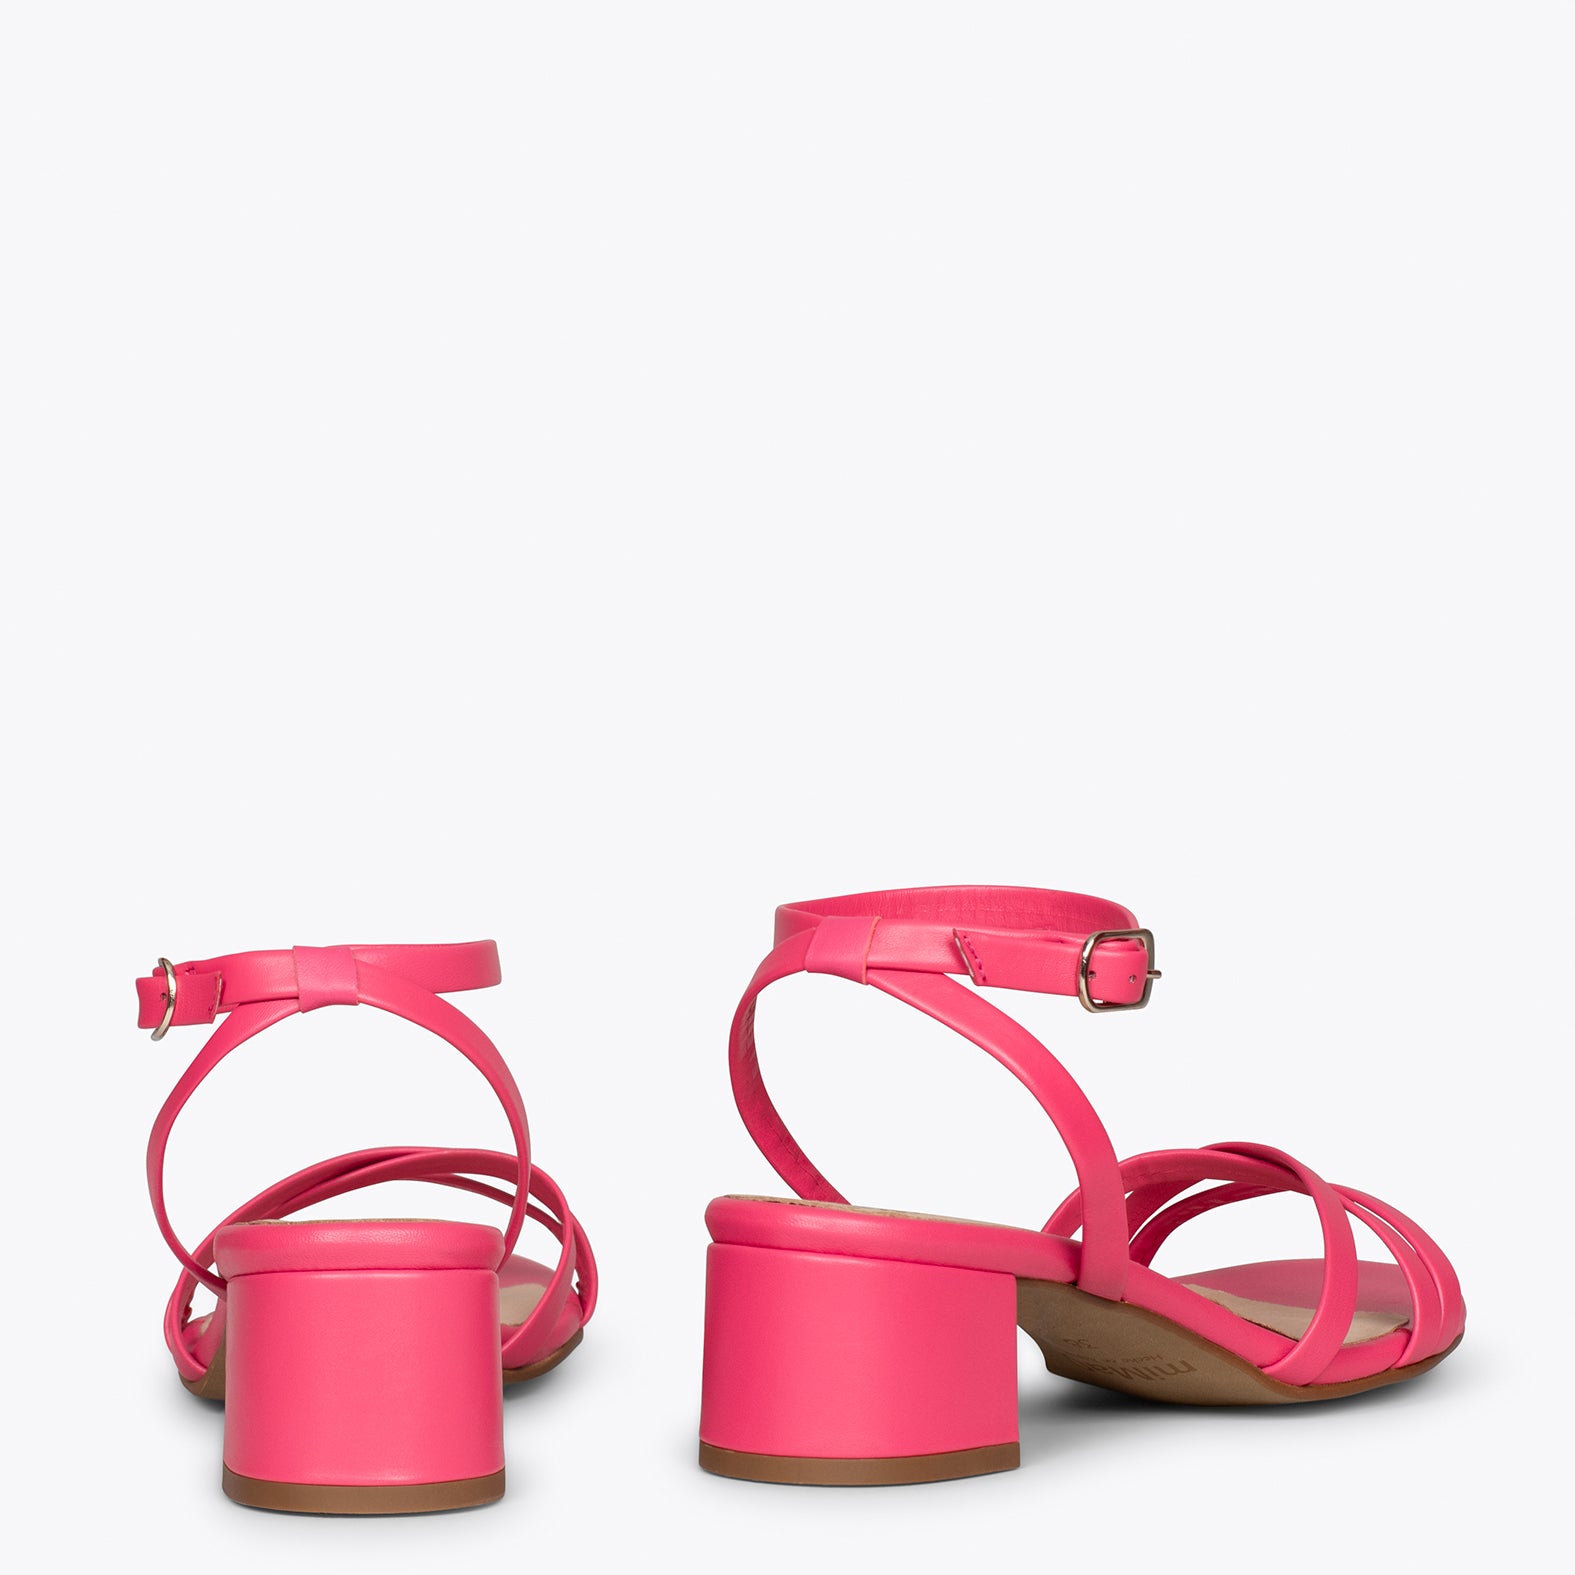 VIENA – FUCHSIA sandals with straps